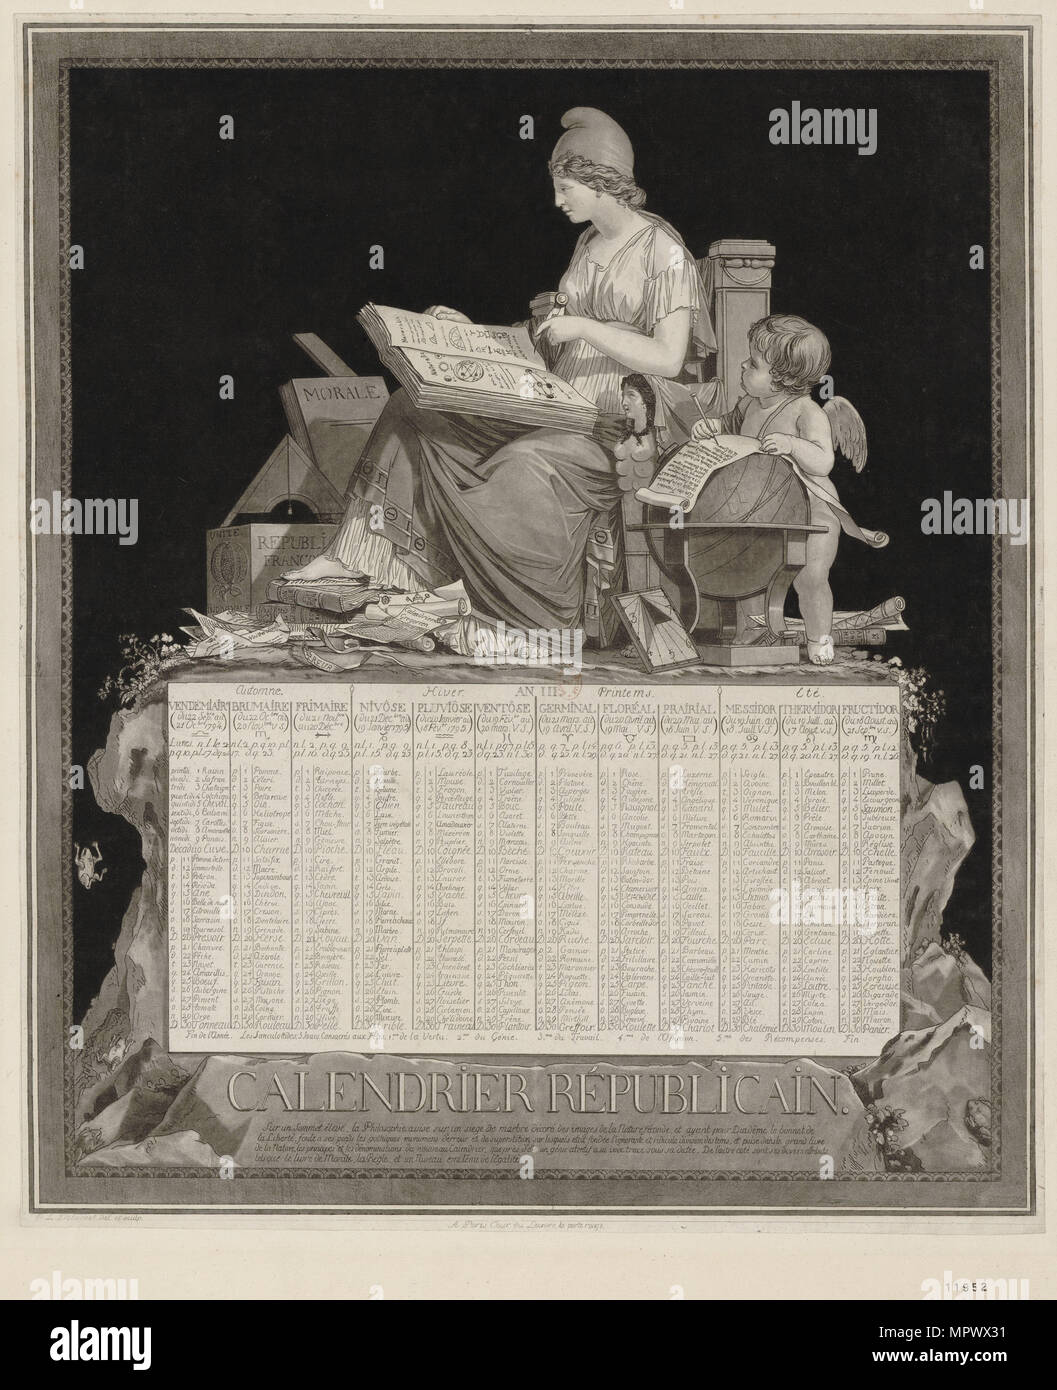 Il Calendario repubblicano francese (Calendario républicain français), 1794. Foto Stock